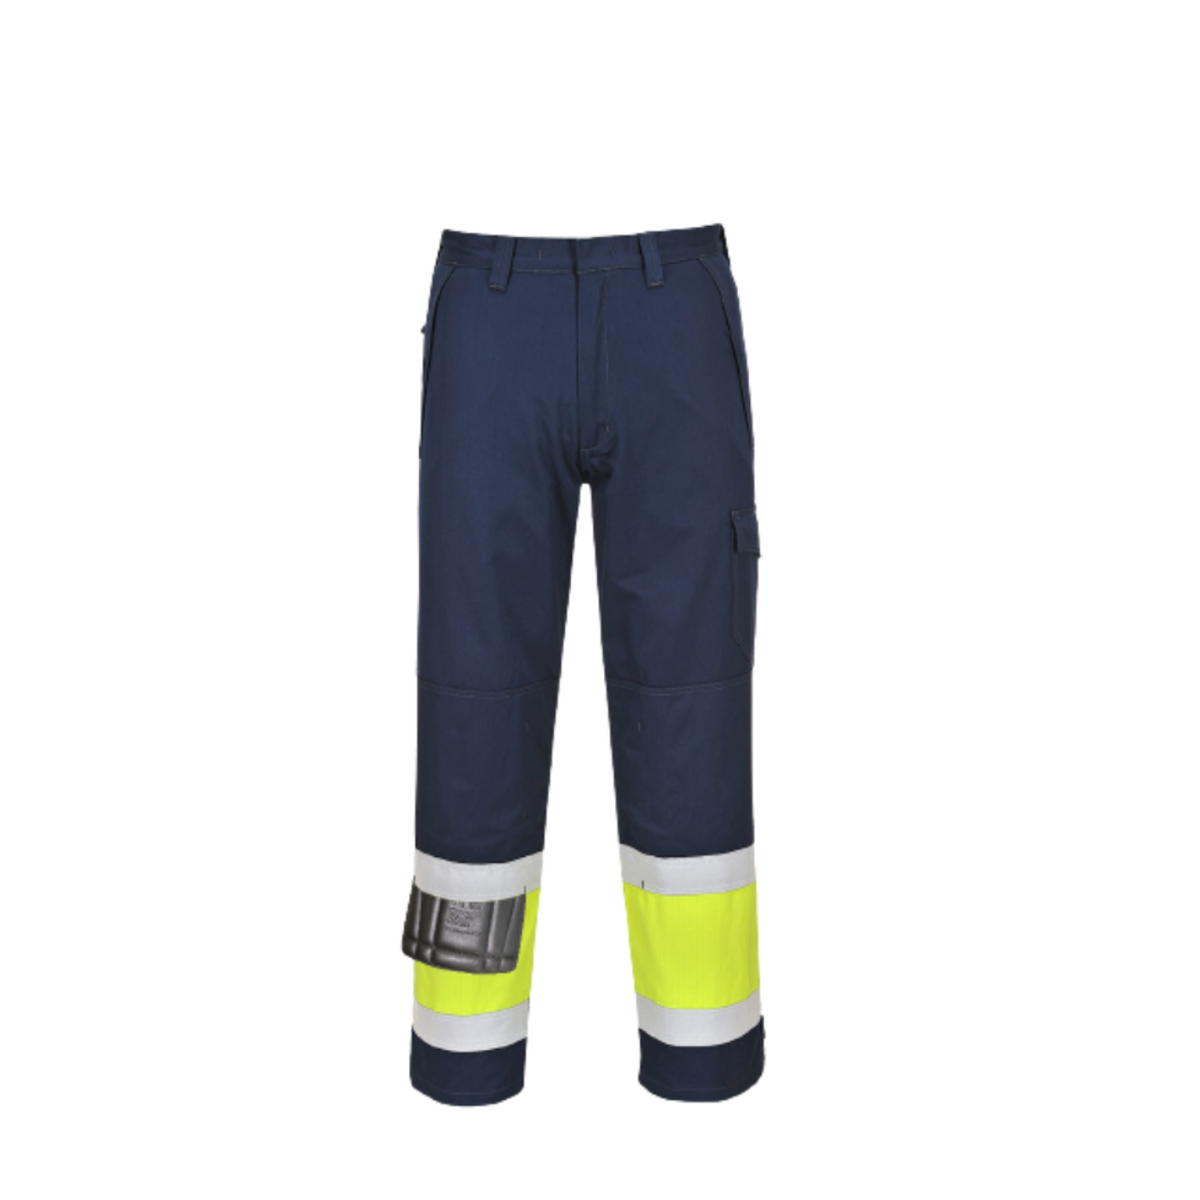 Portwest Hi-Vis Modaflame Pants Comfortable Flame Resistant Work Pant MV26-Collins Clothing Co